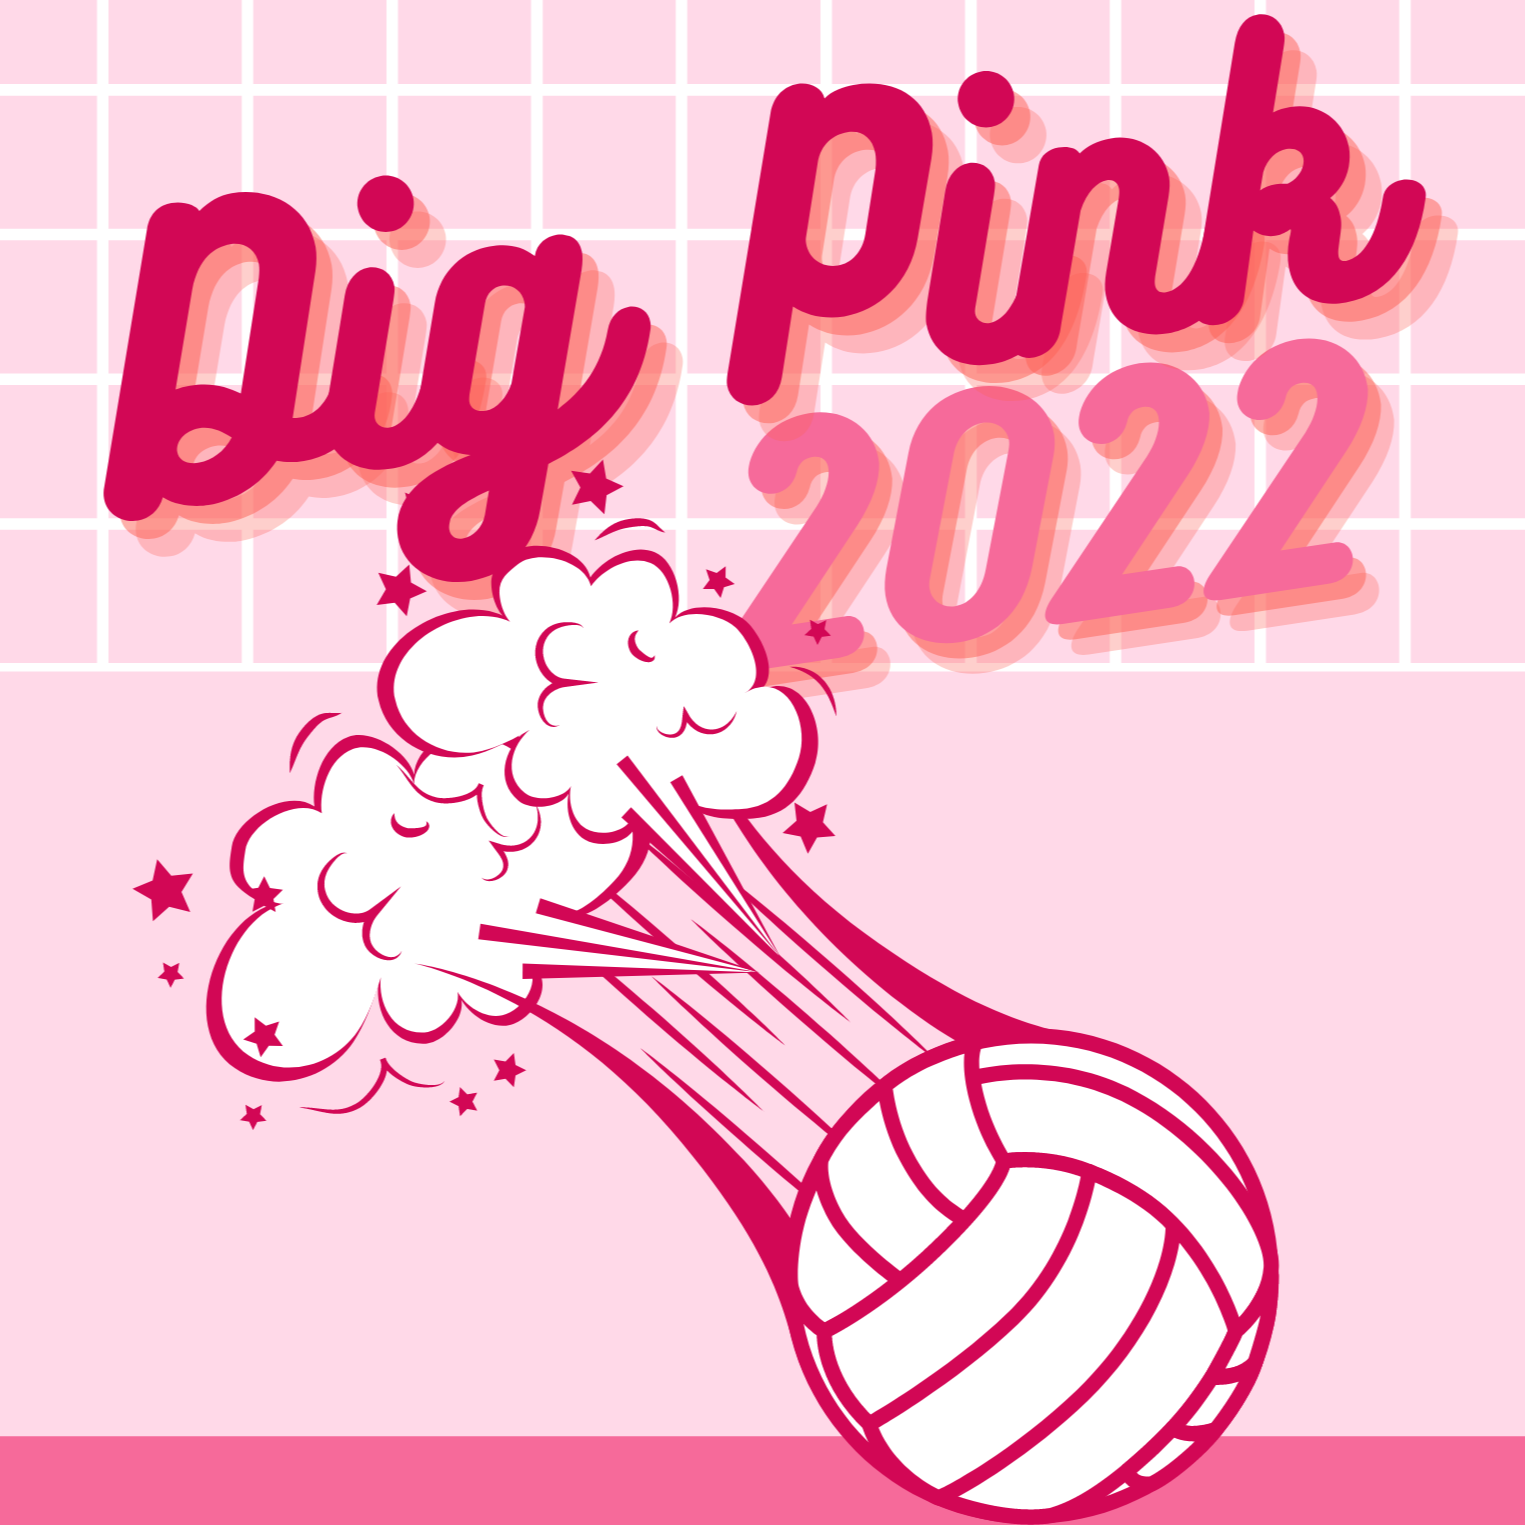 Dig Pink - October 4th